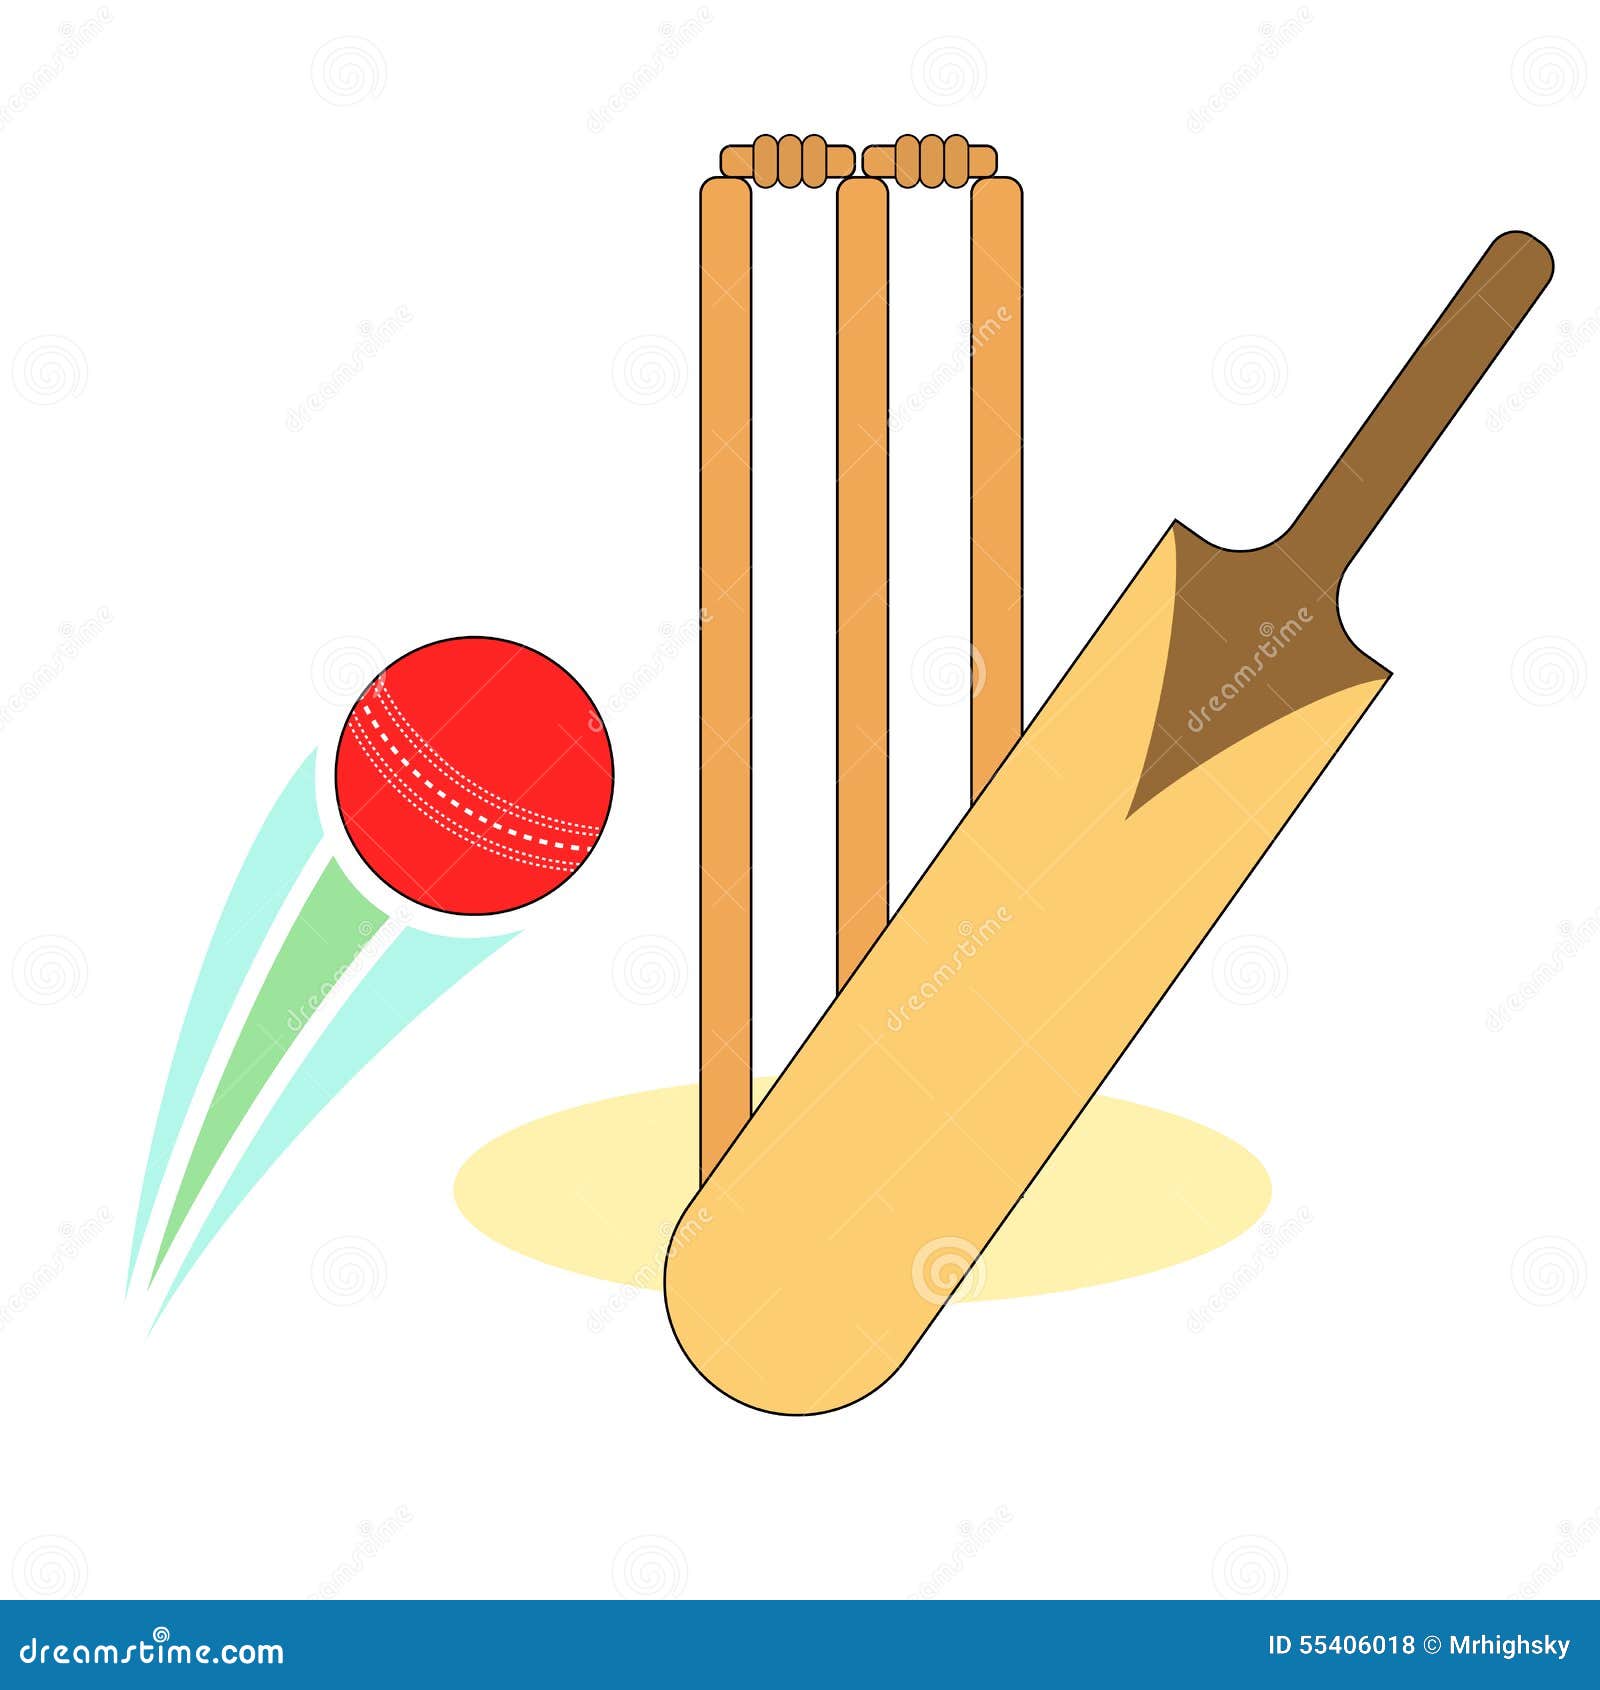 Cricket equipment stock vector. Illustration of game - 55406018